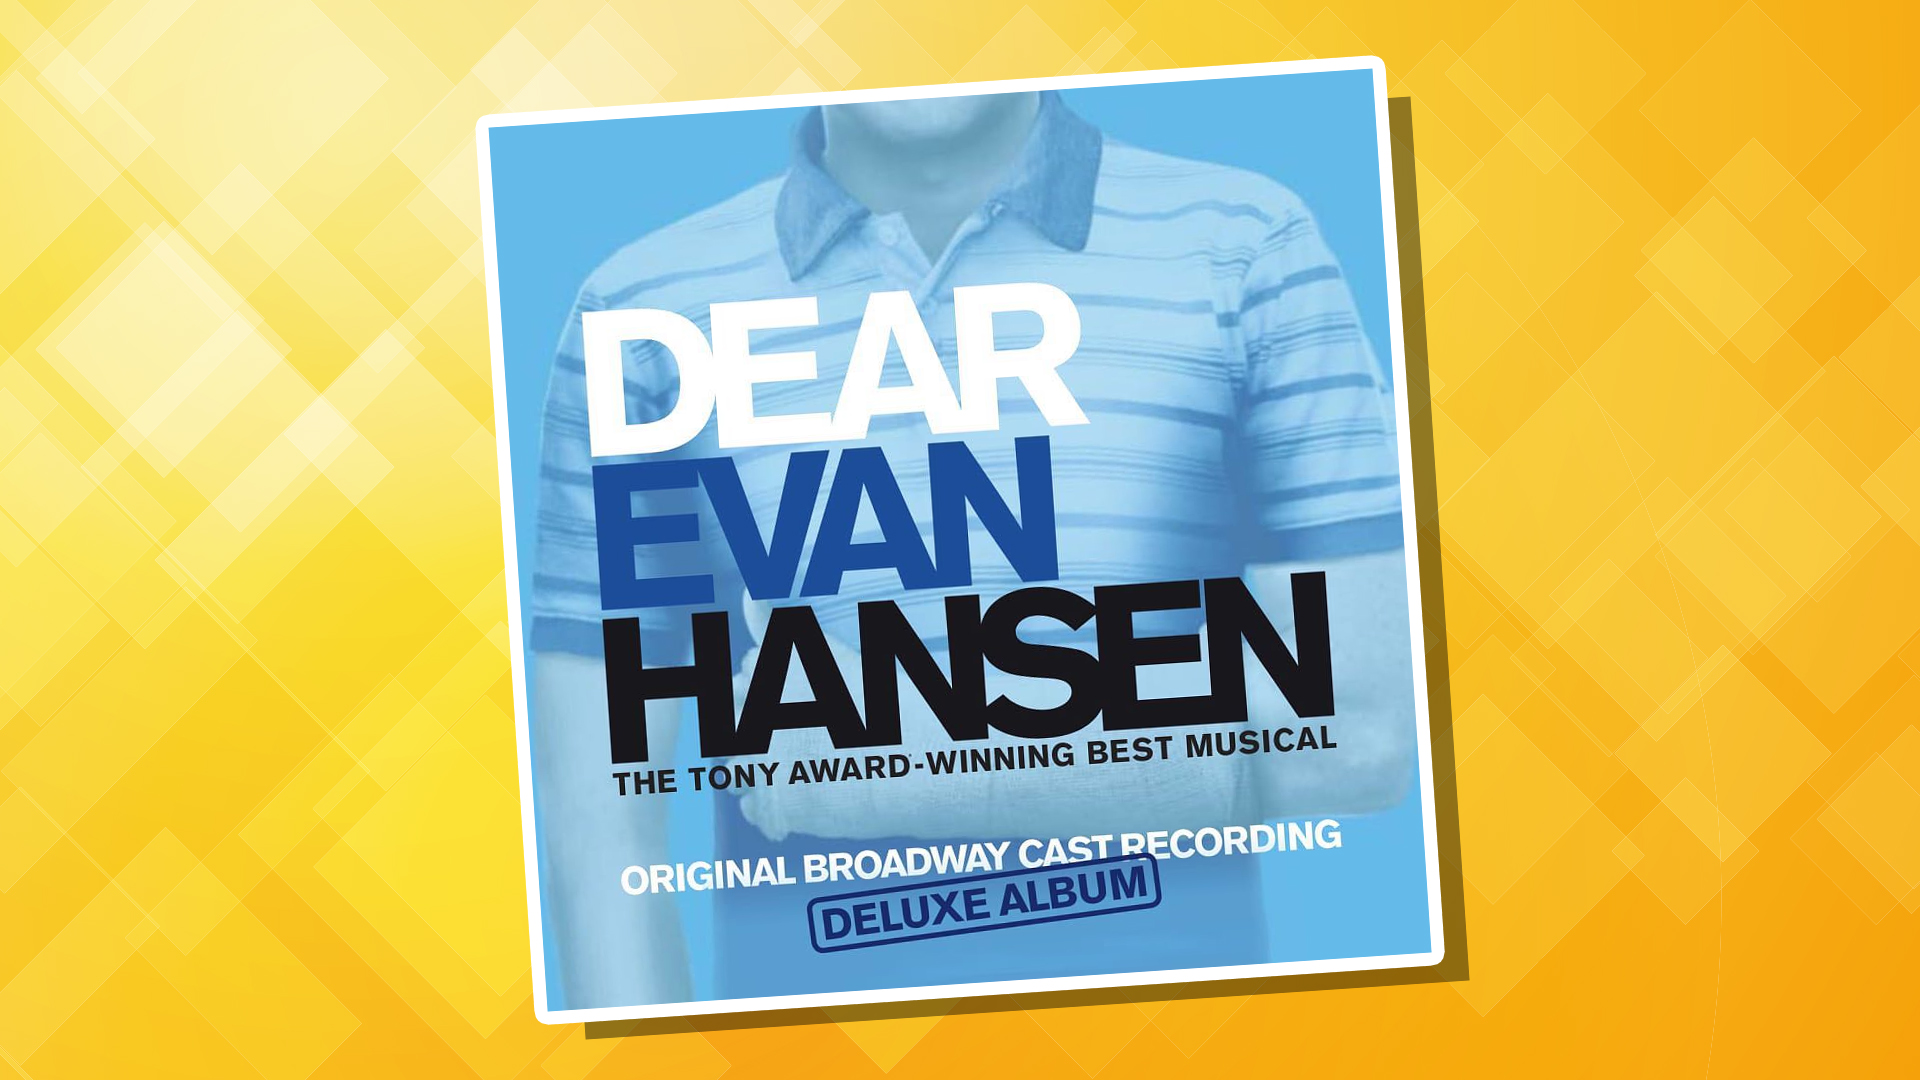 The cover of the Dear Evan Hansen cast album